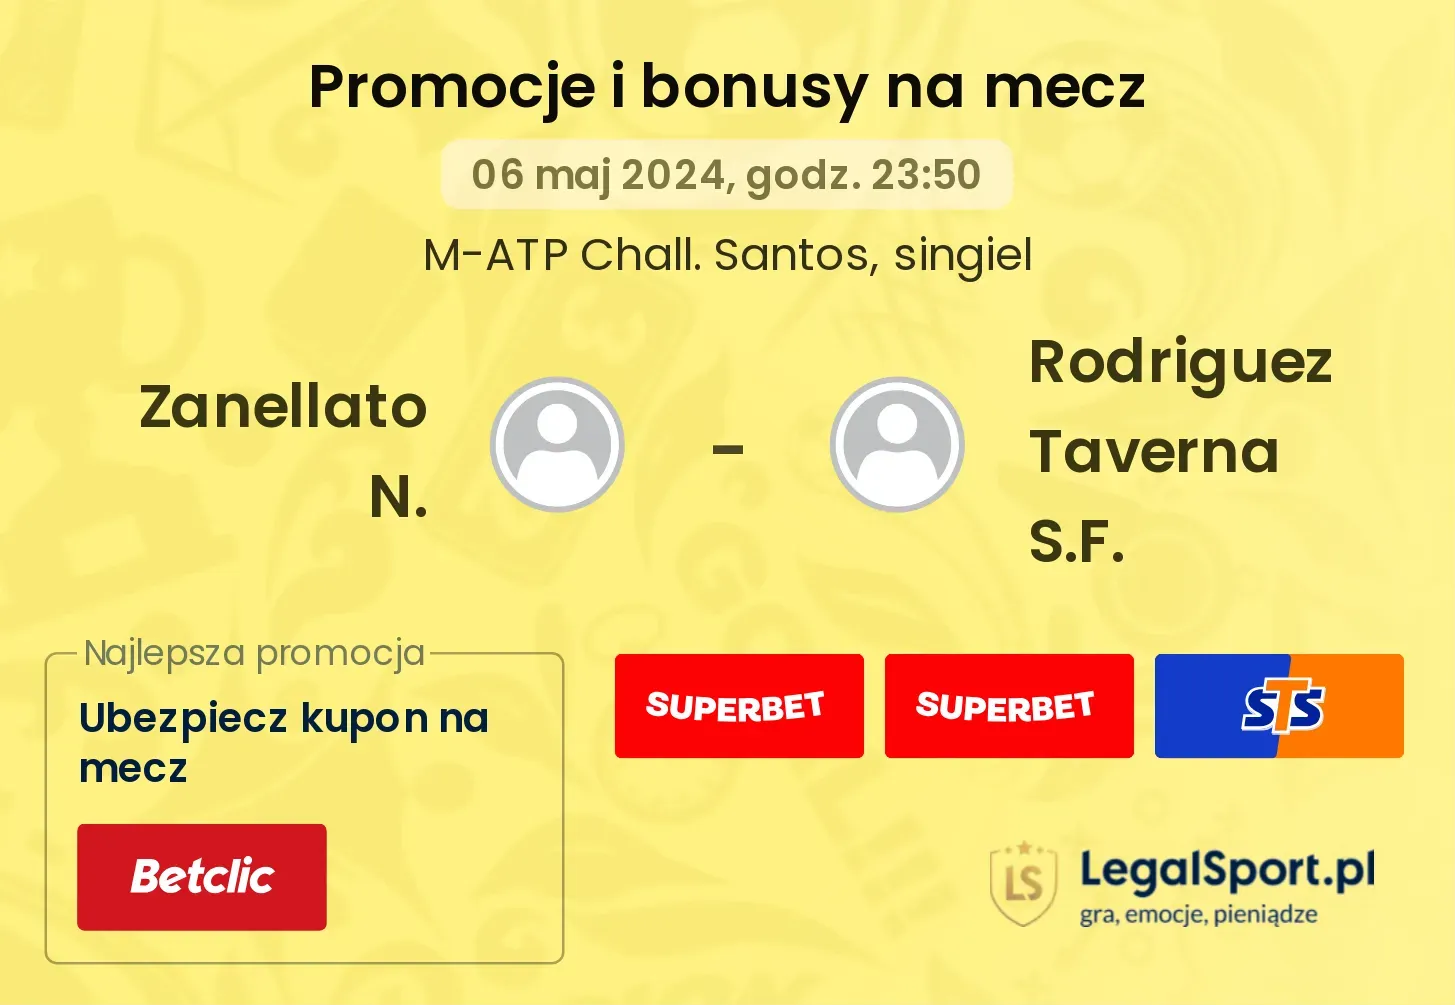 Zanellato N. - Rodriguez Taverna S.F. promocje bonusy na mecz